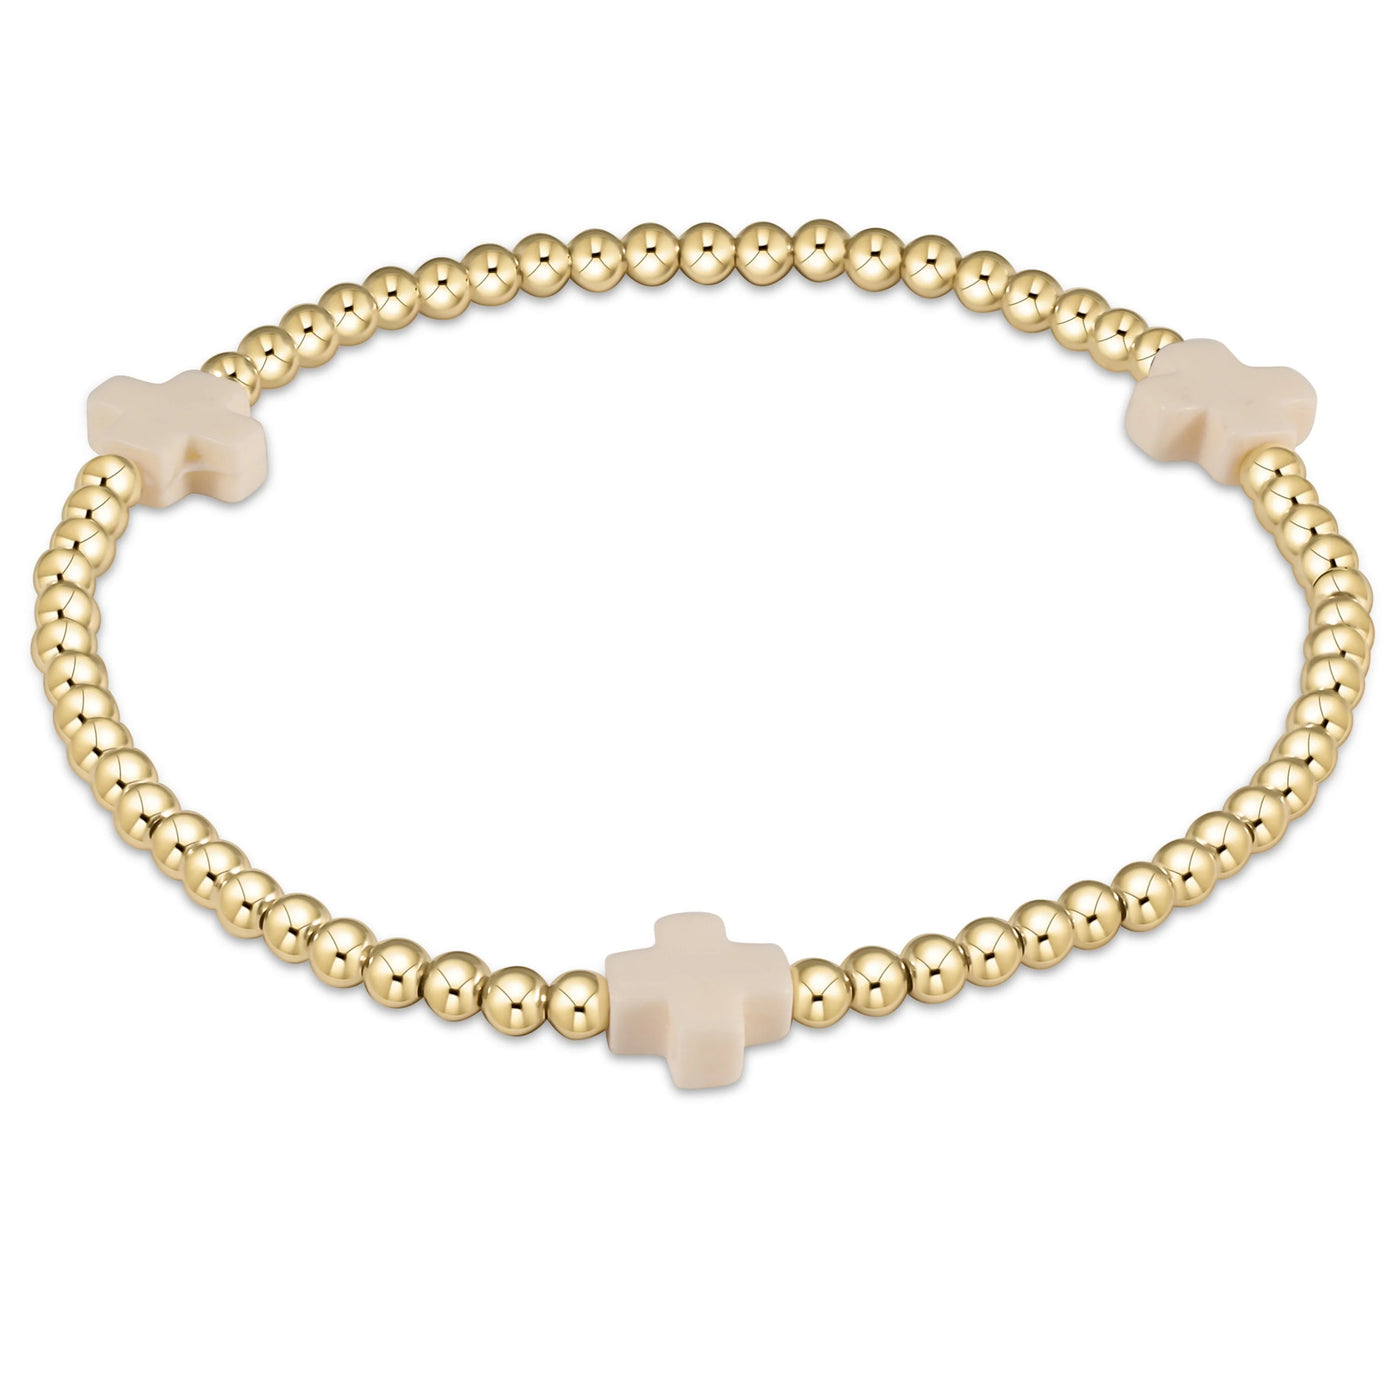 Enewton signature cross gold pattern 3mm bead bracelet - off-white